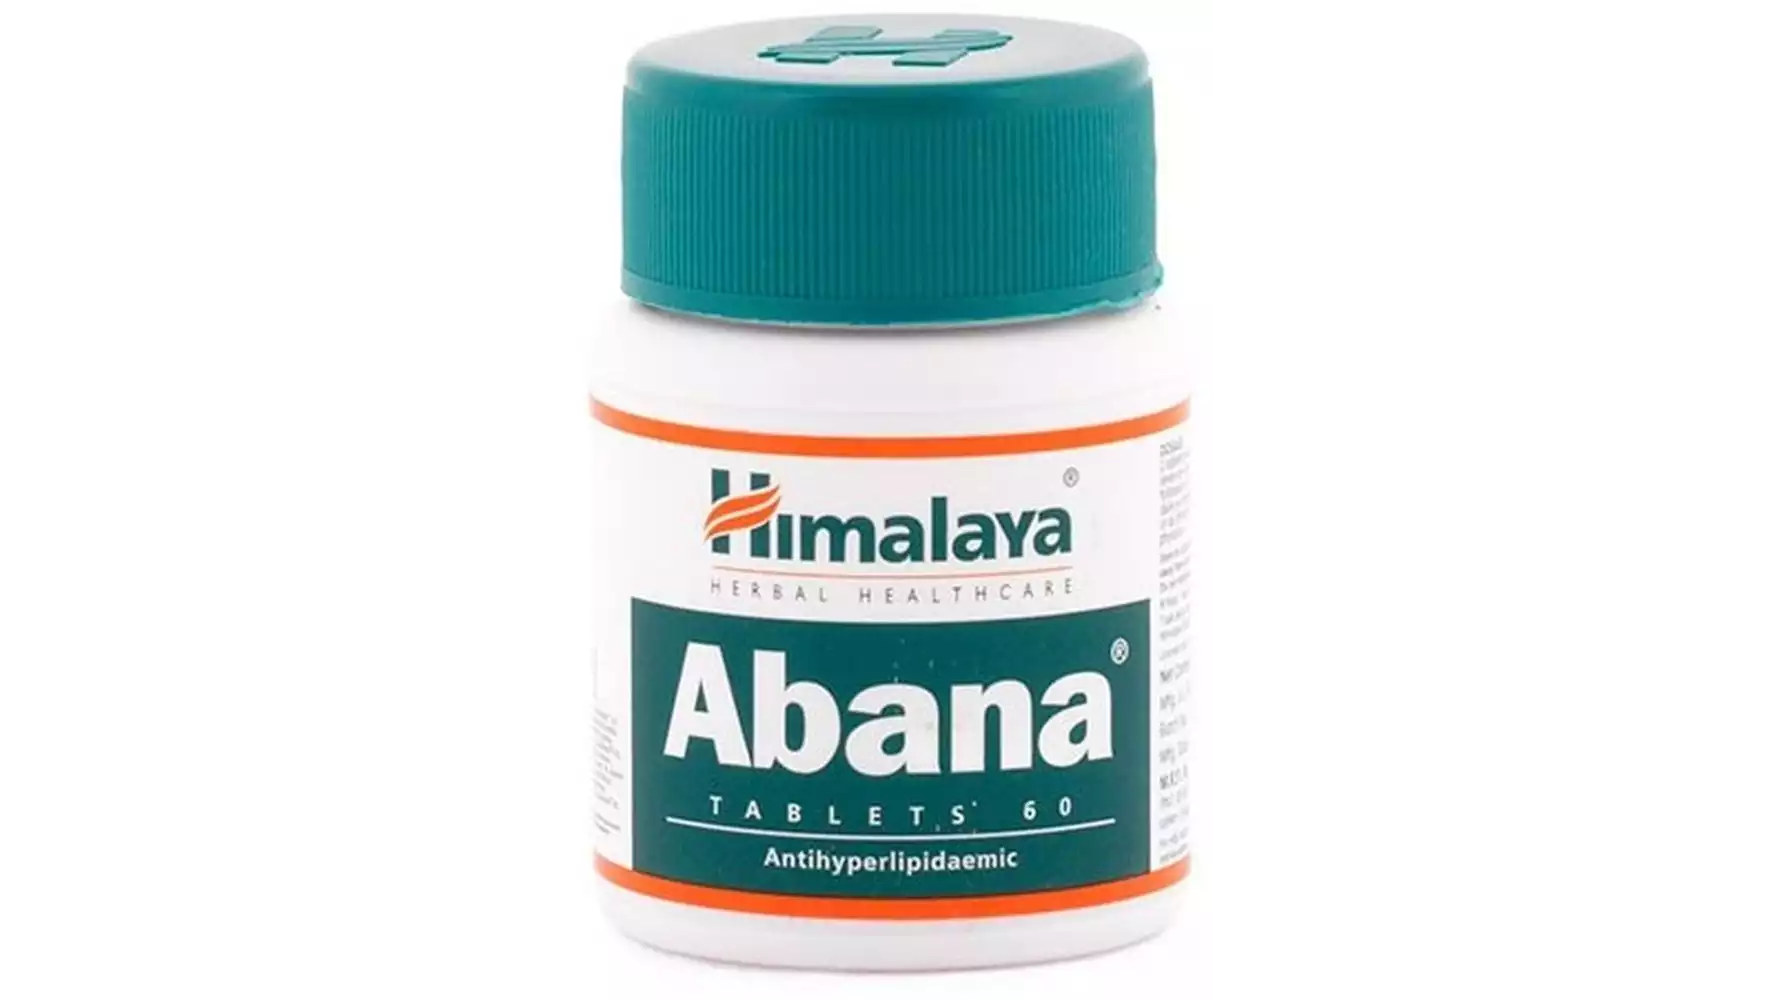 Himalaya Abana Tablet (60tab)